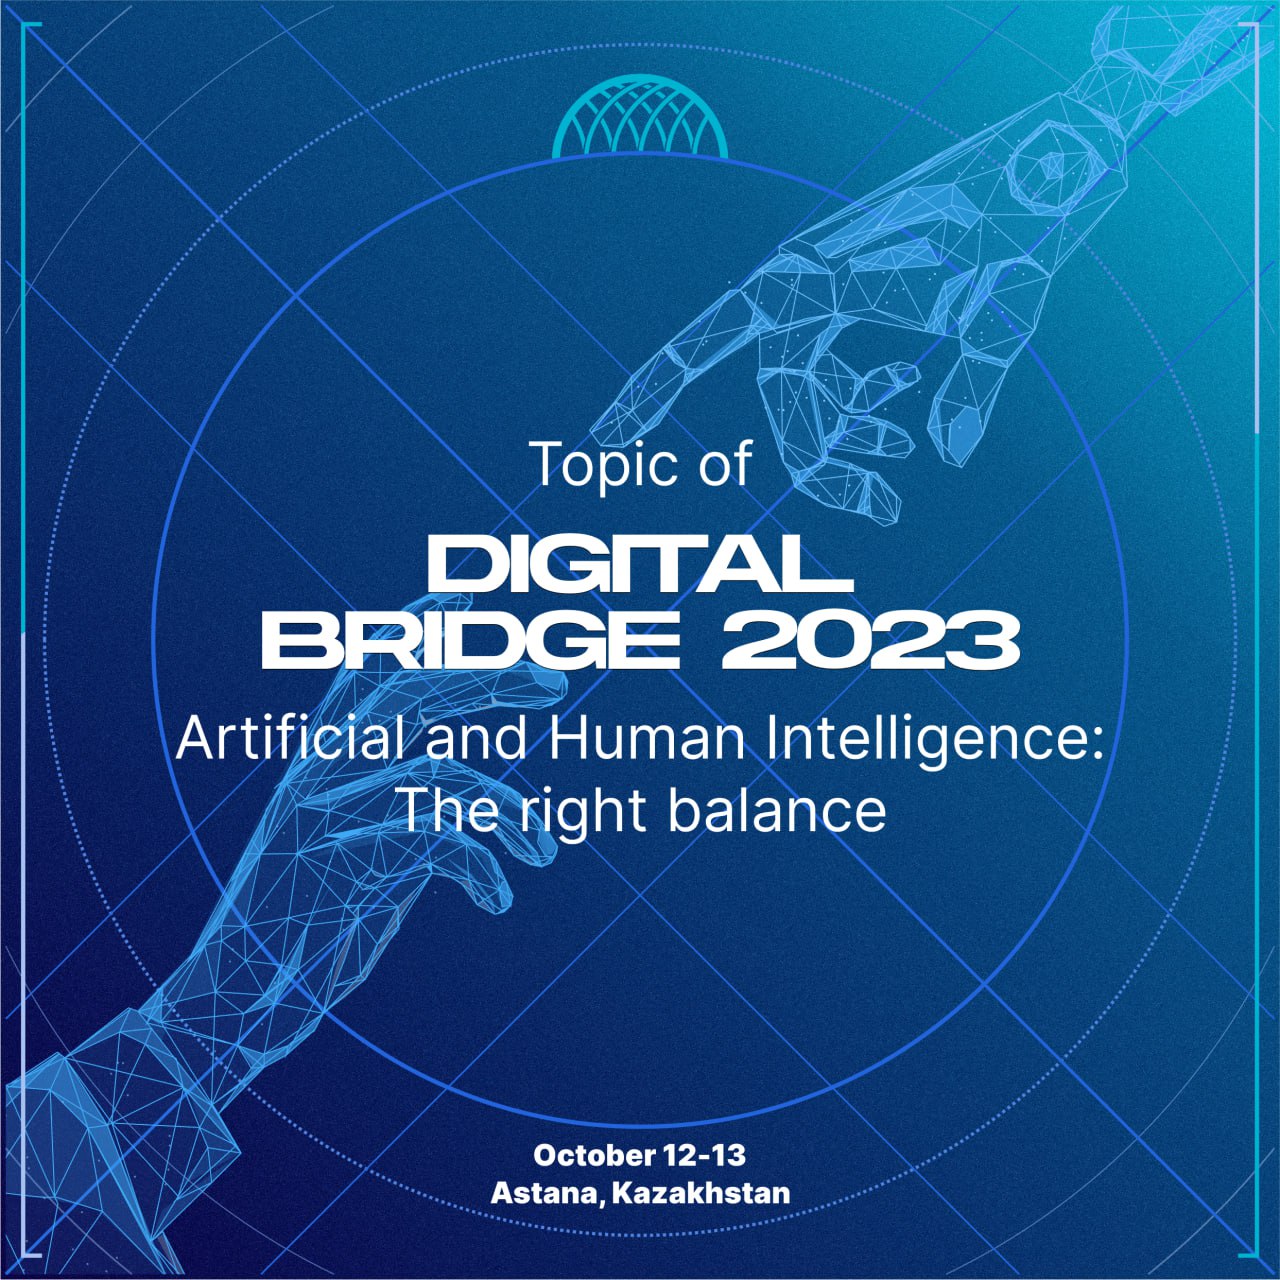 Digital Bridge 2023: Maintaining the Balance Between Artificial and Human Intelligence